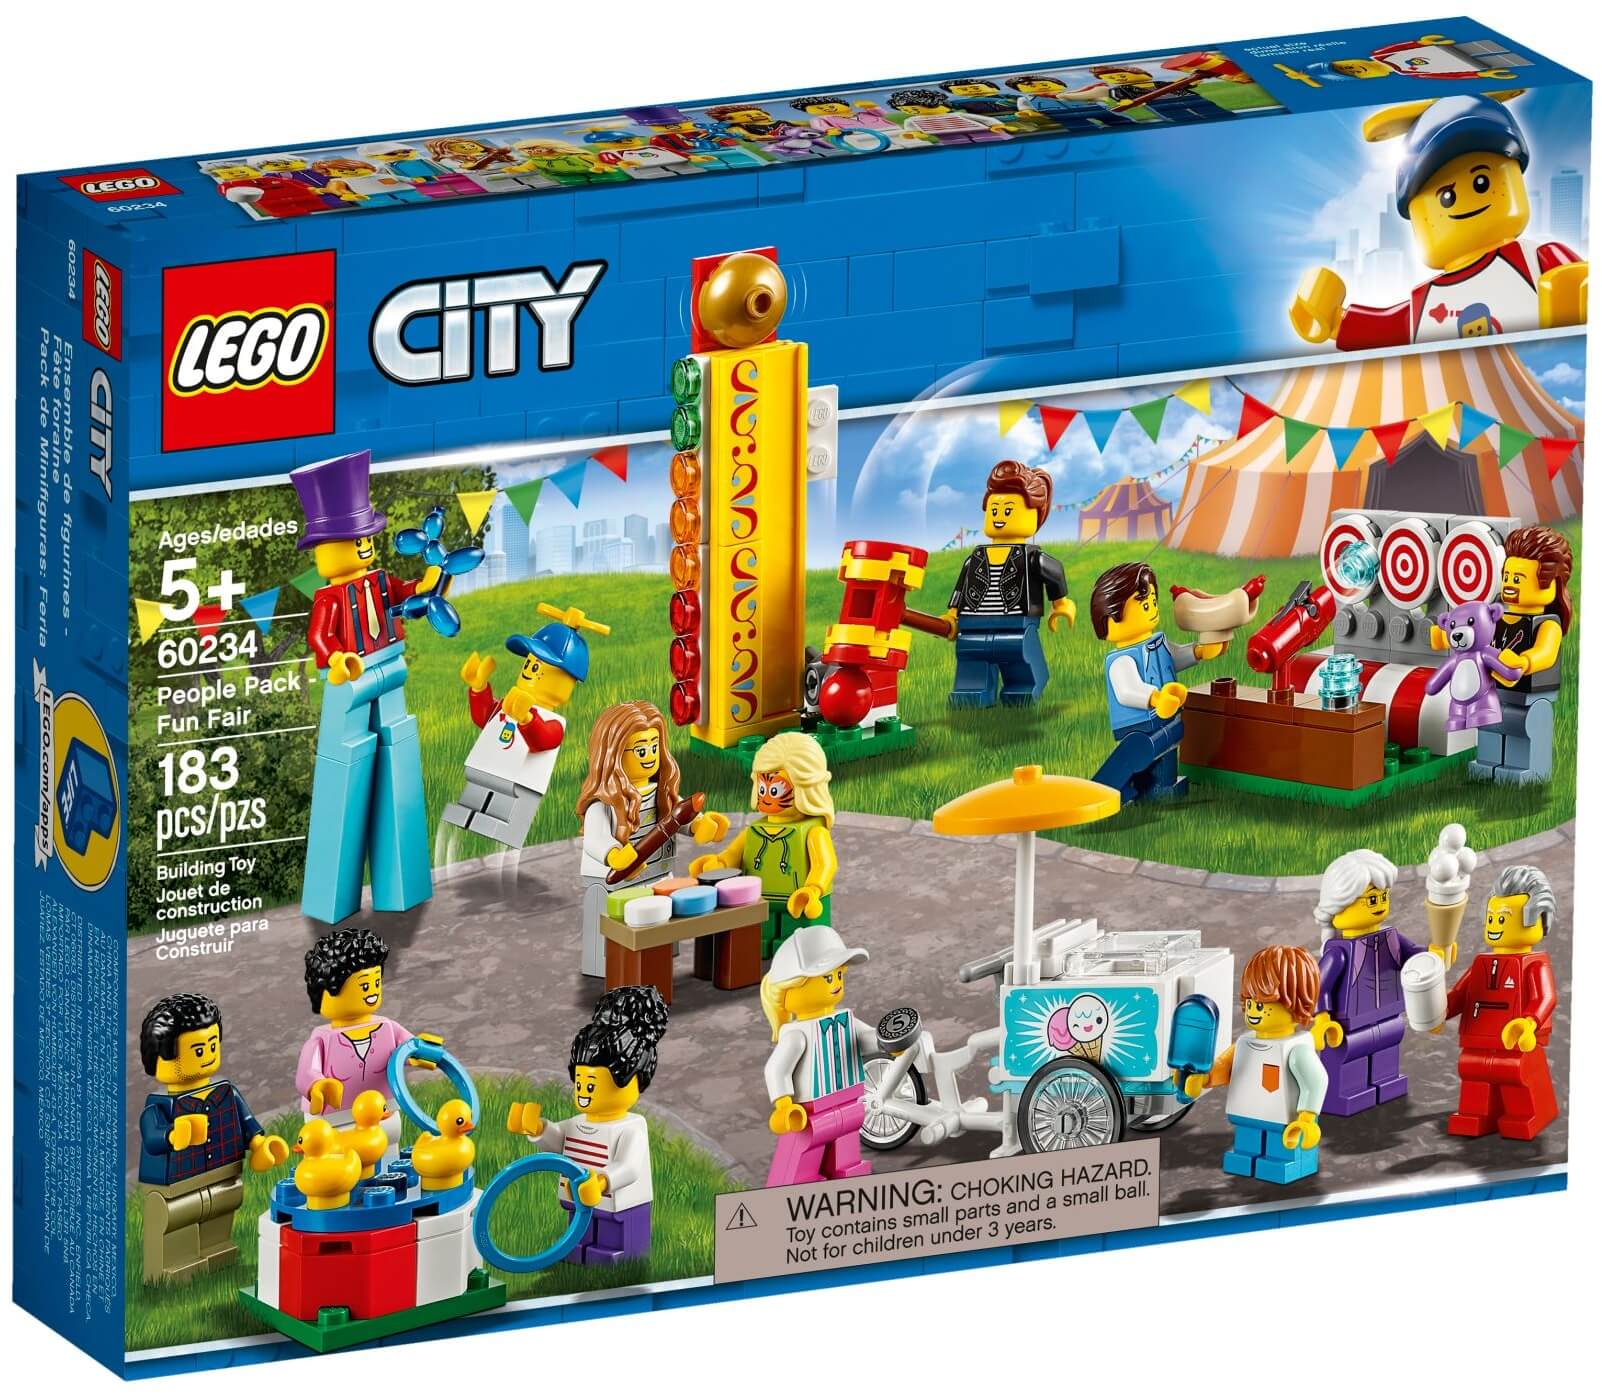 Pack de minifiguras Feria ( Lego 60234 ) imagen c